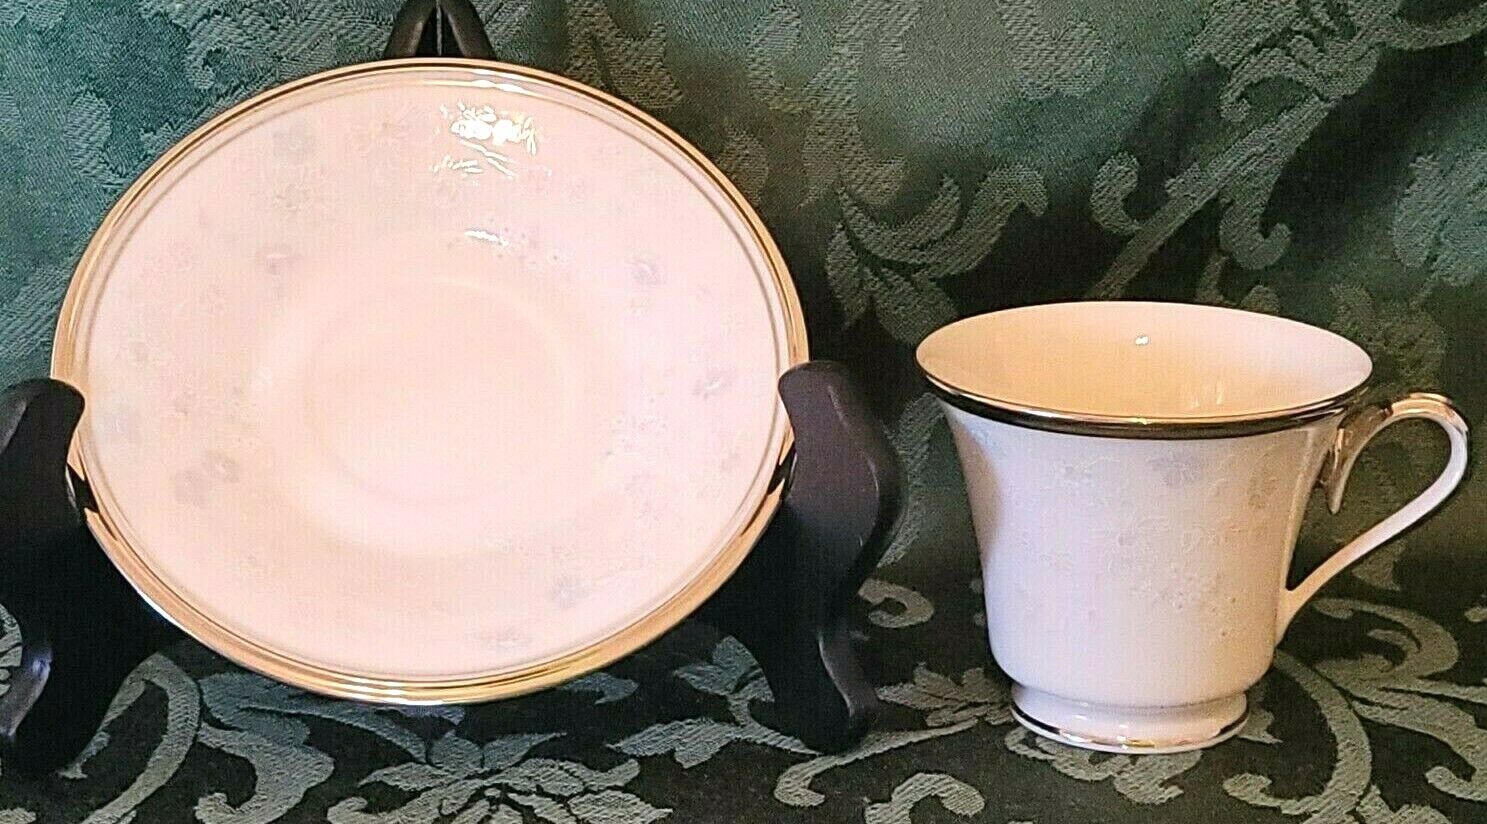 BEAUTIFUL 1981 Lenox NICOLE Porcelain Teacups & Saucers ~NEW/NU-GORGEOUS GIFTS! Lenox N/A